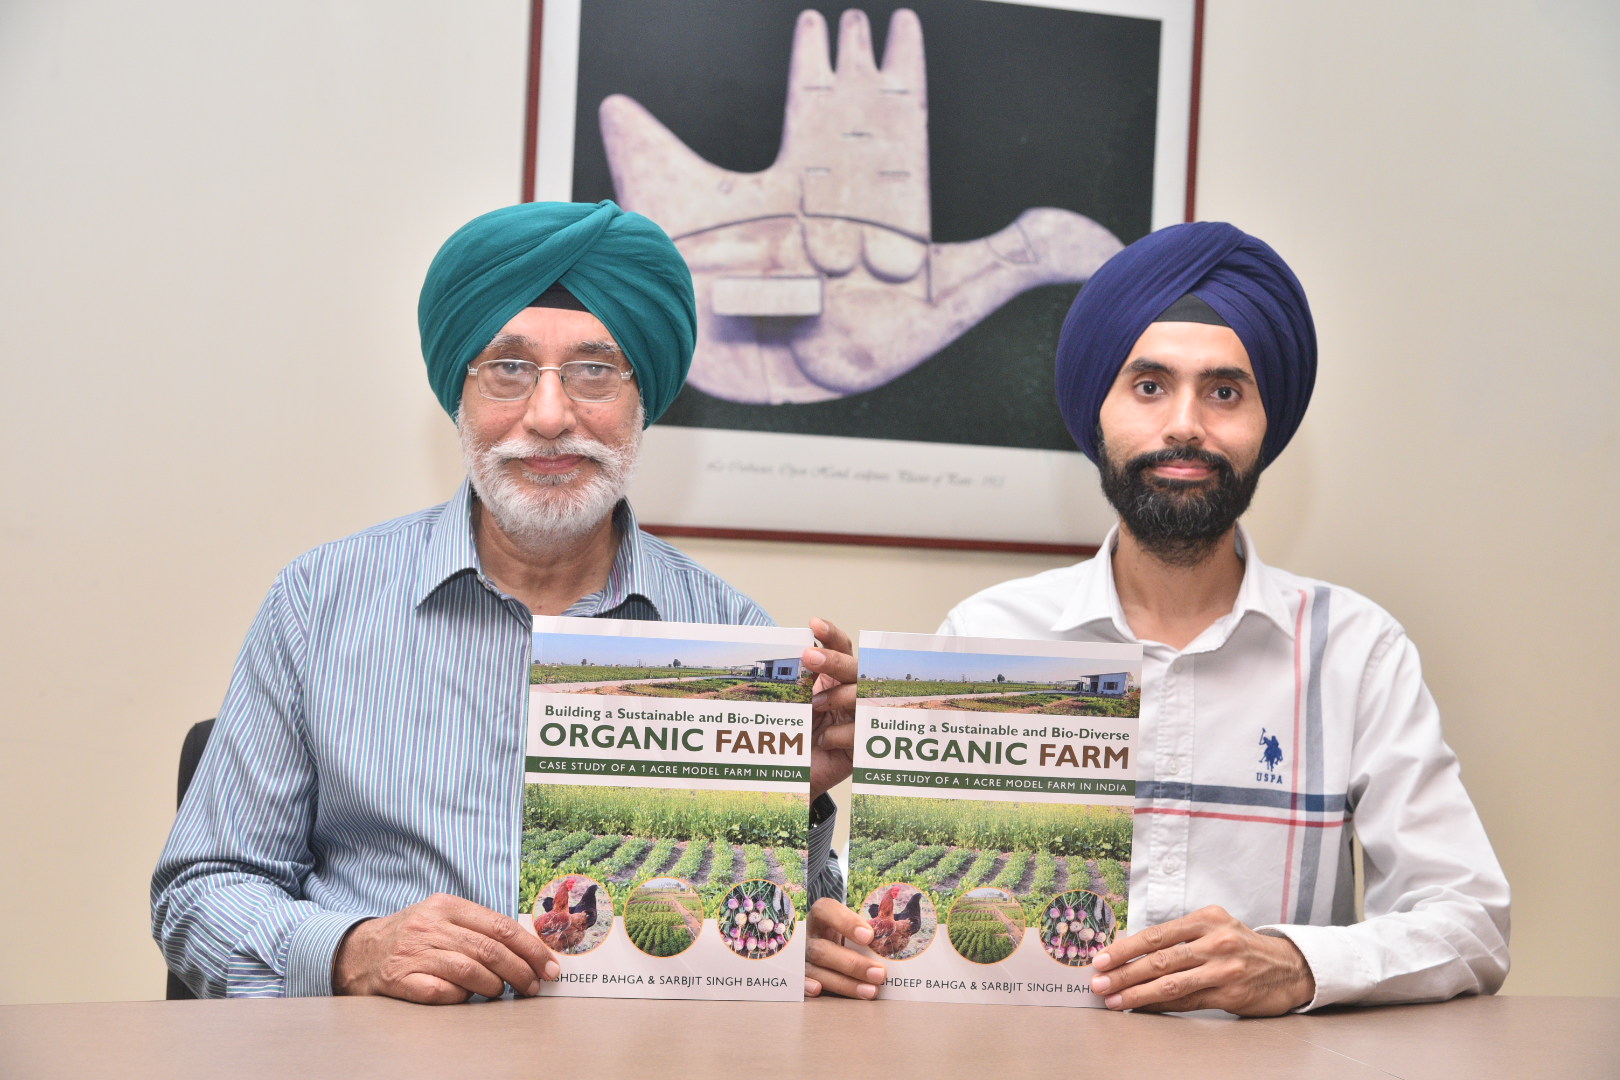 Arshdeep Bahga and Sarbjit Bahga have launched a memoir on improving farmers' livelihoods